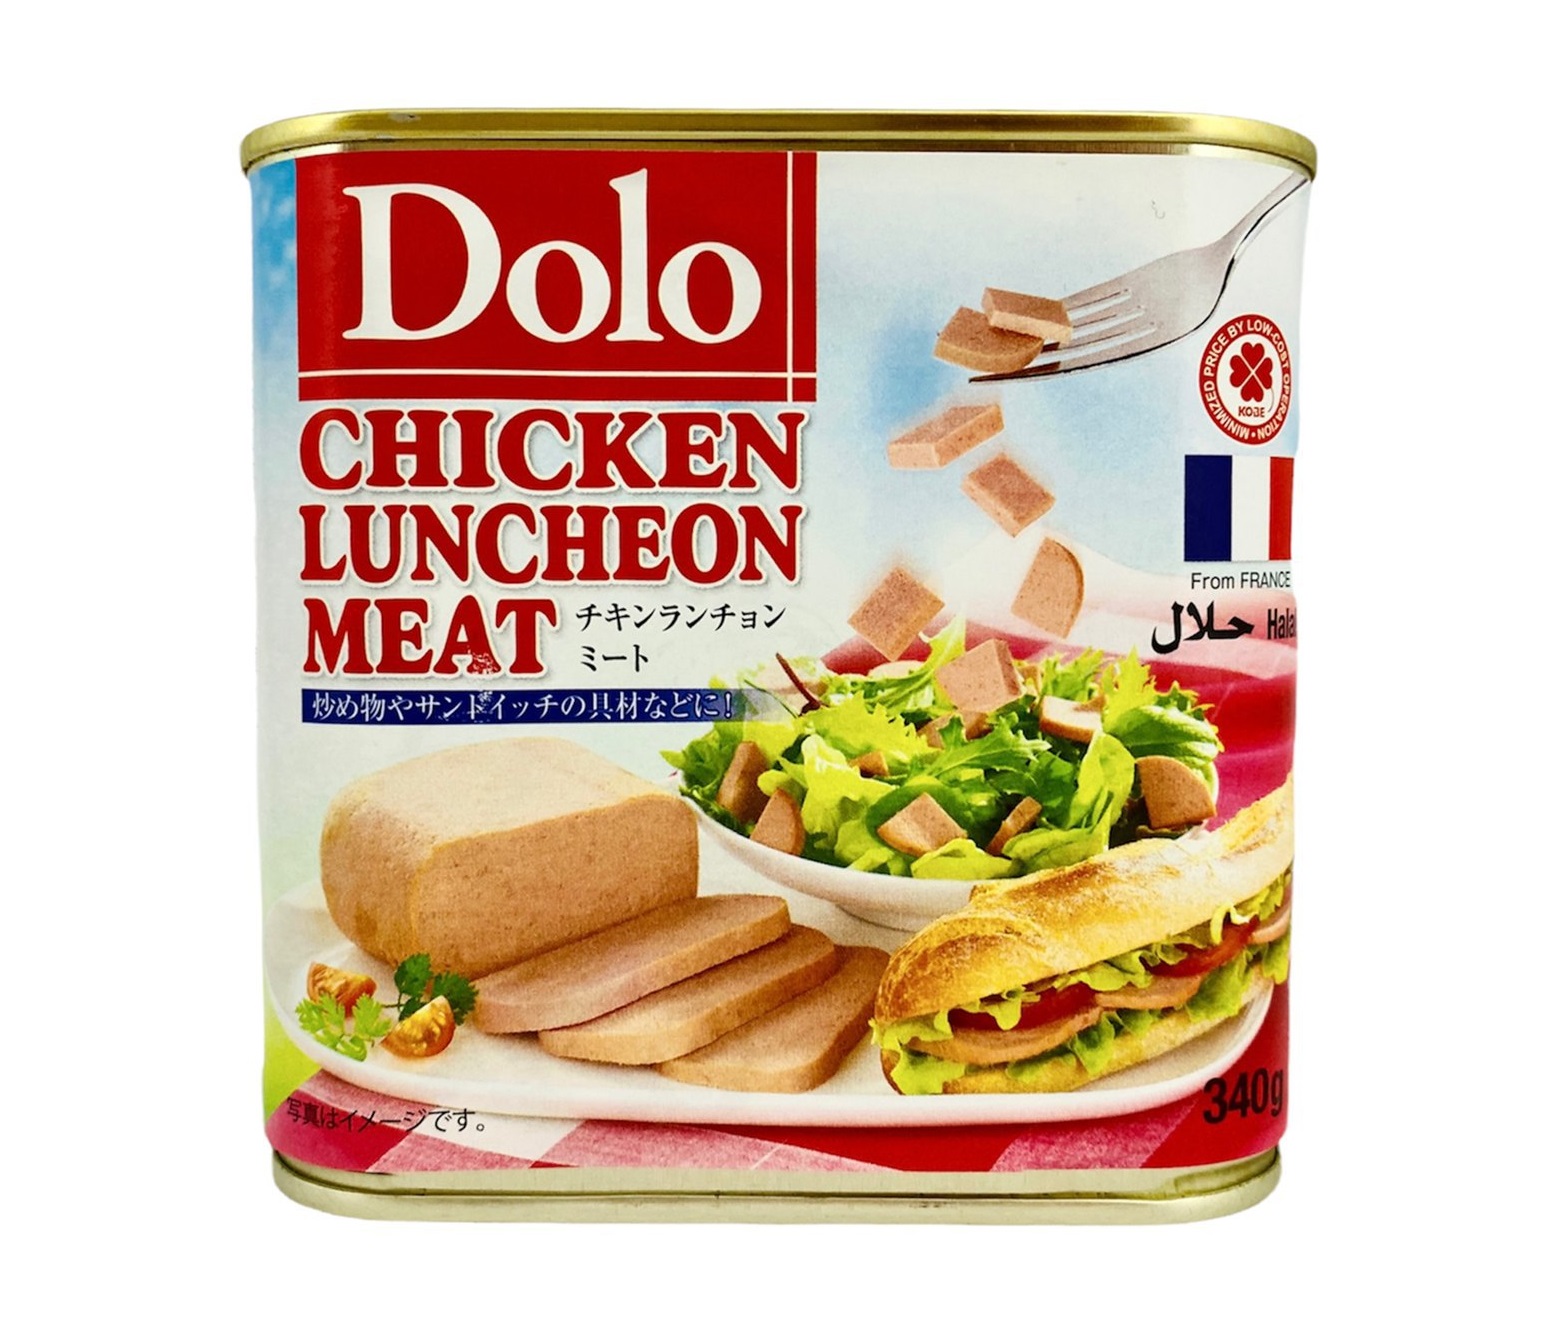 Dolo Chicken Luncheon Meat